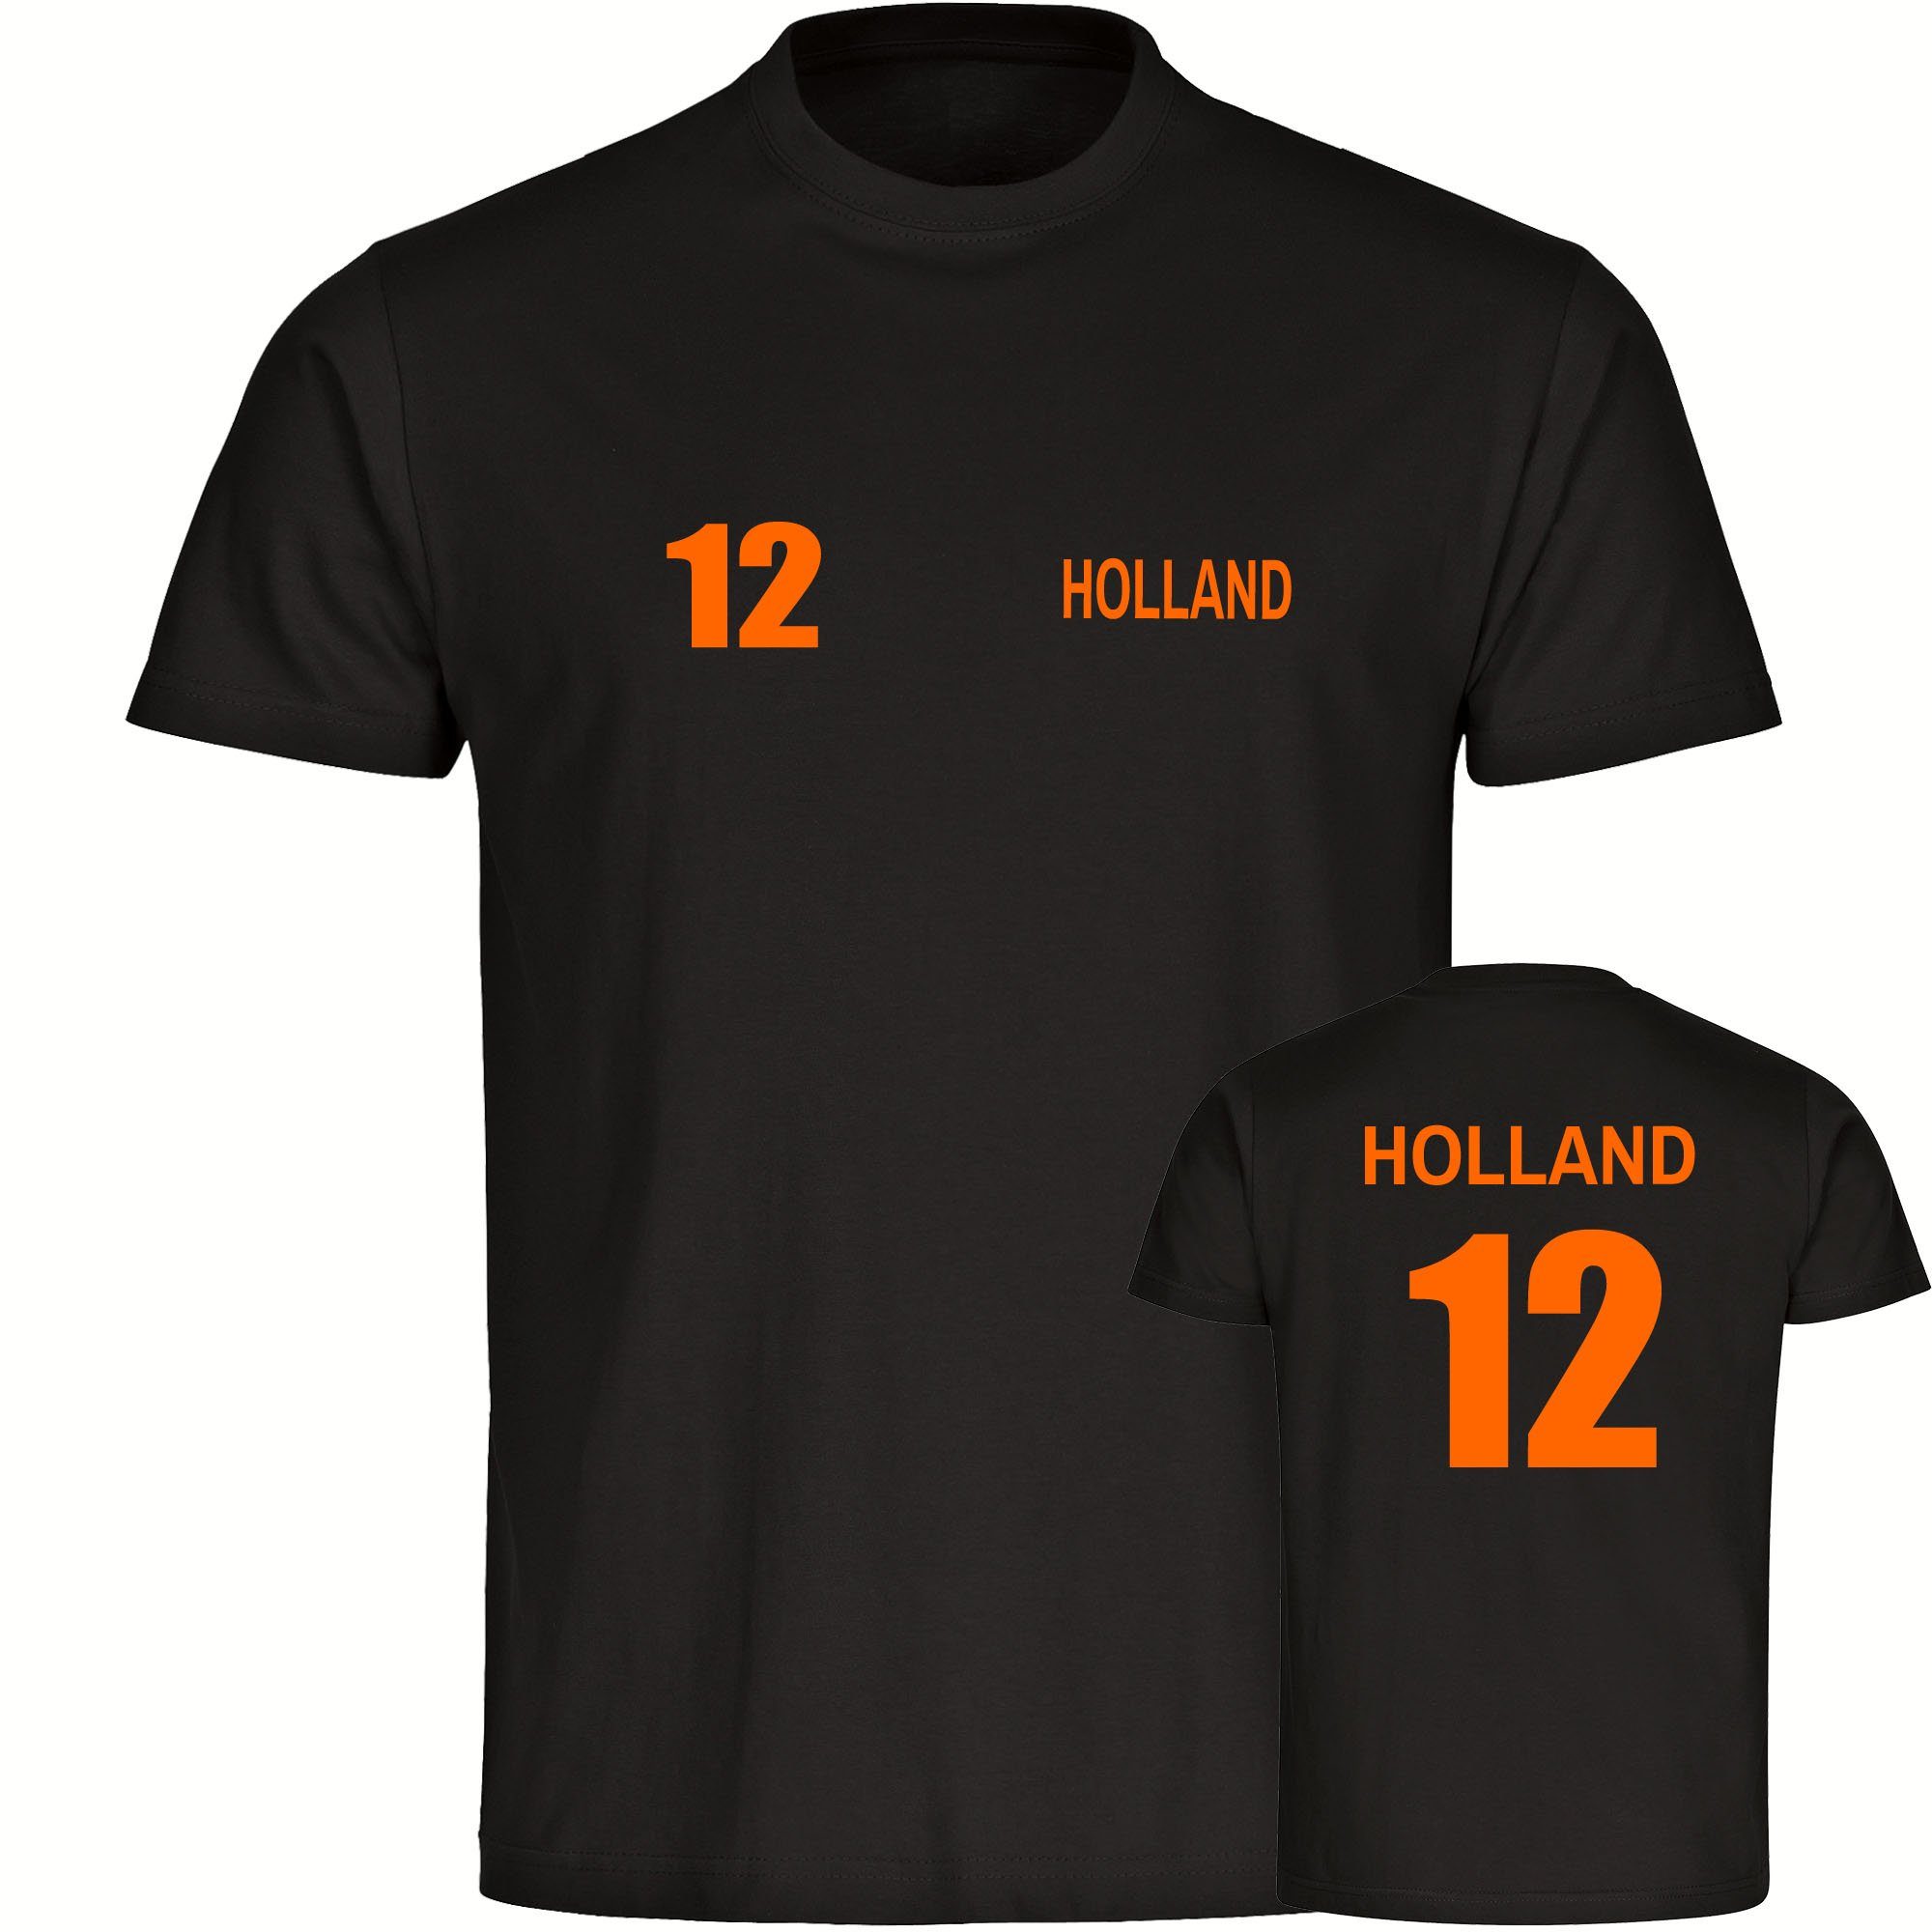 multifanshop T-Shirt Kinder Holland - Trikot 12 - Boy Girl